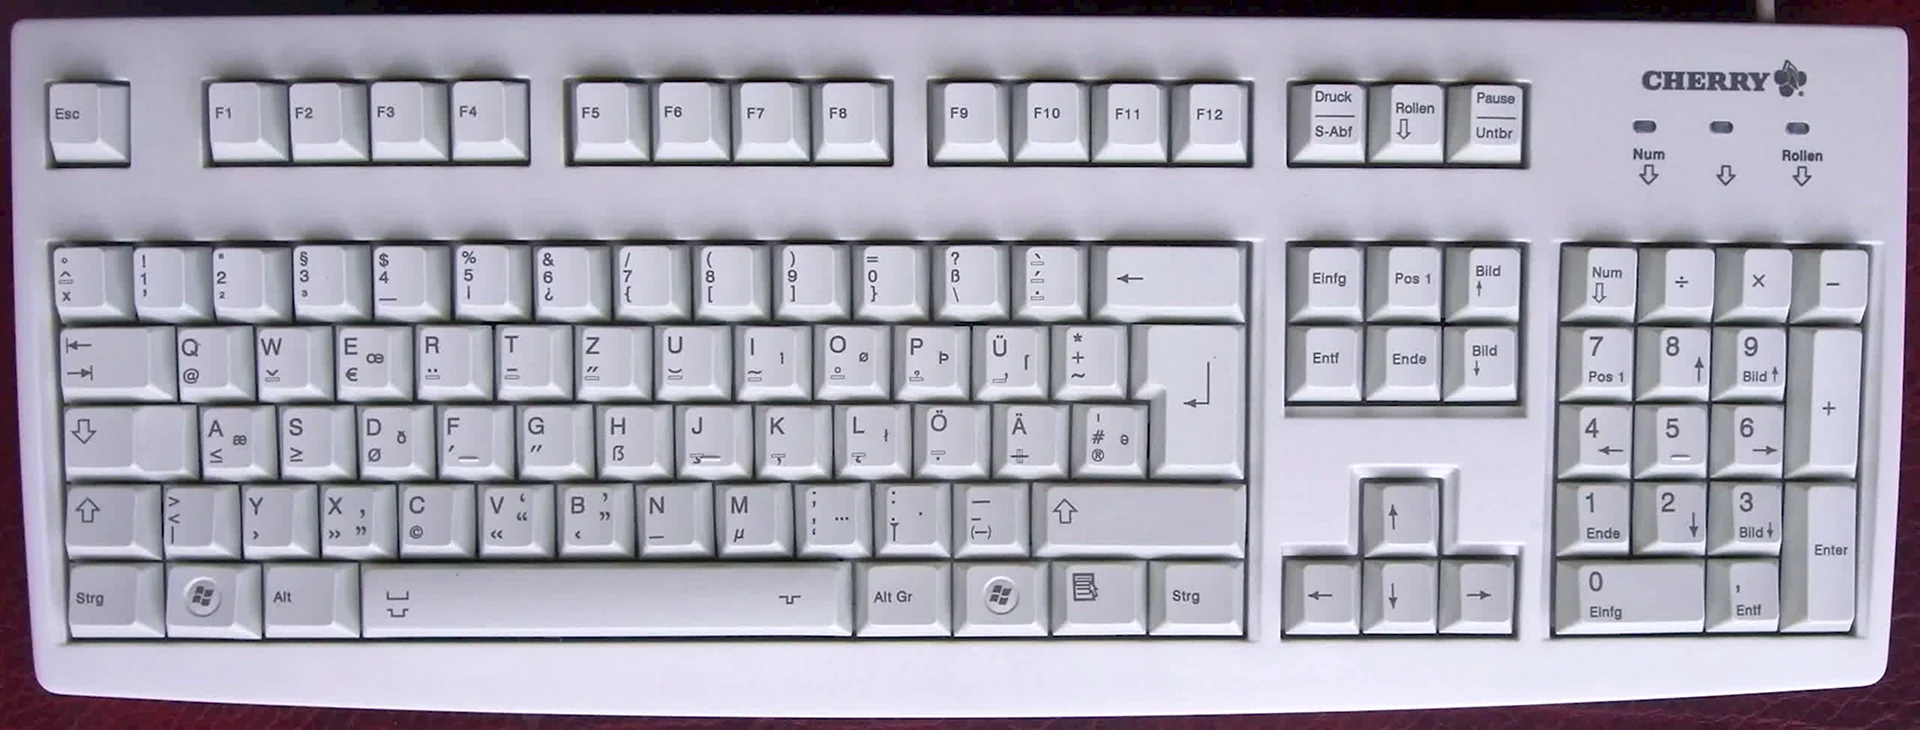 Немецкая раскладка клавиатуры